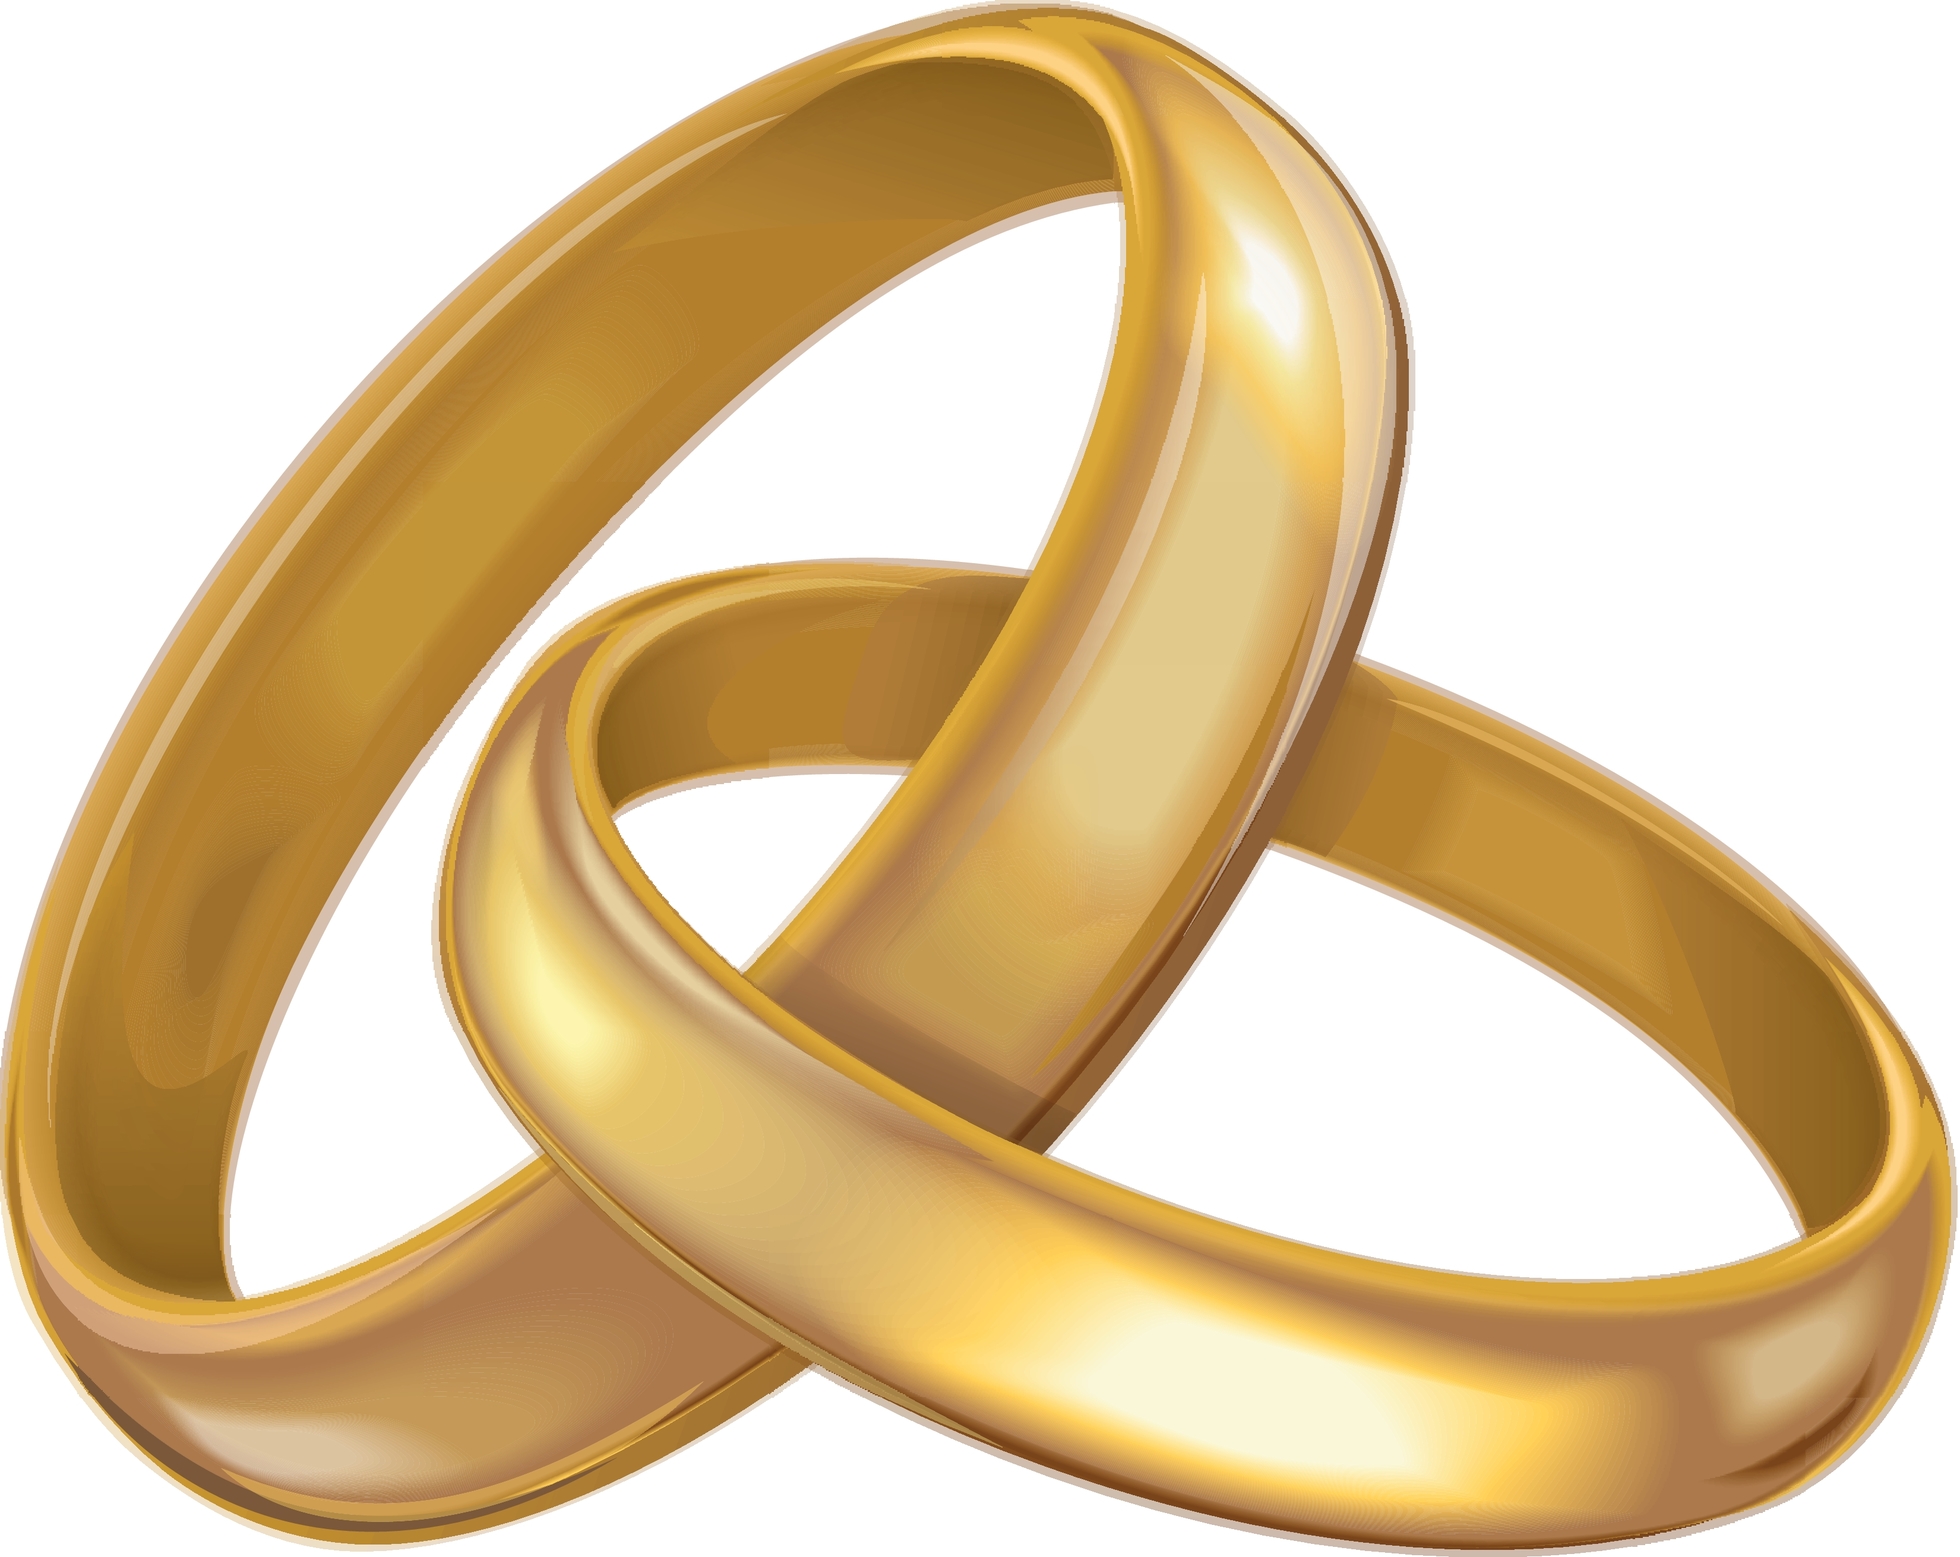 Golden wedding ring clipart 